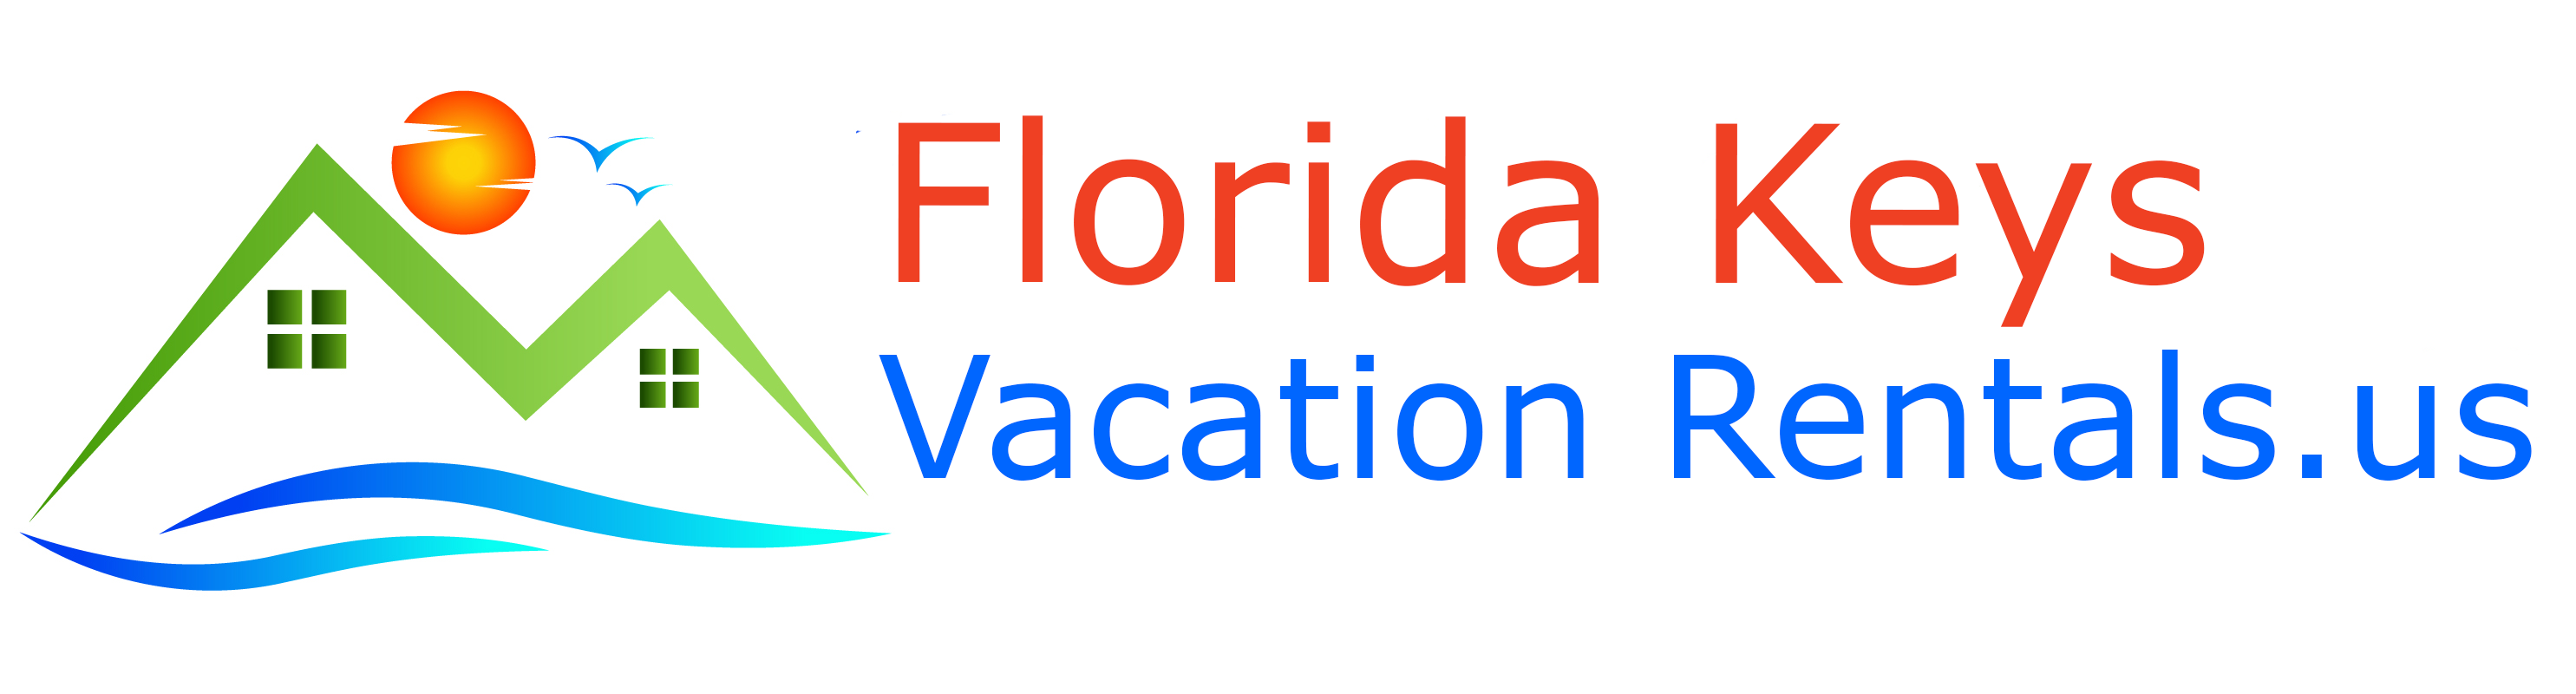 Florida keys vacation rentals